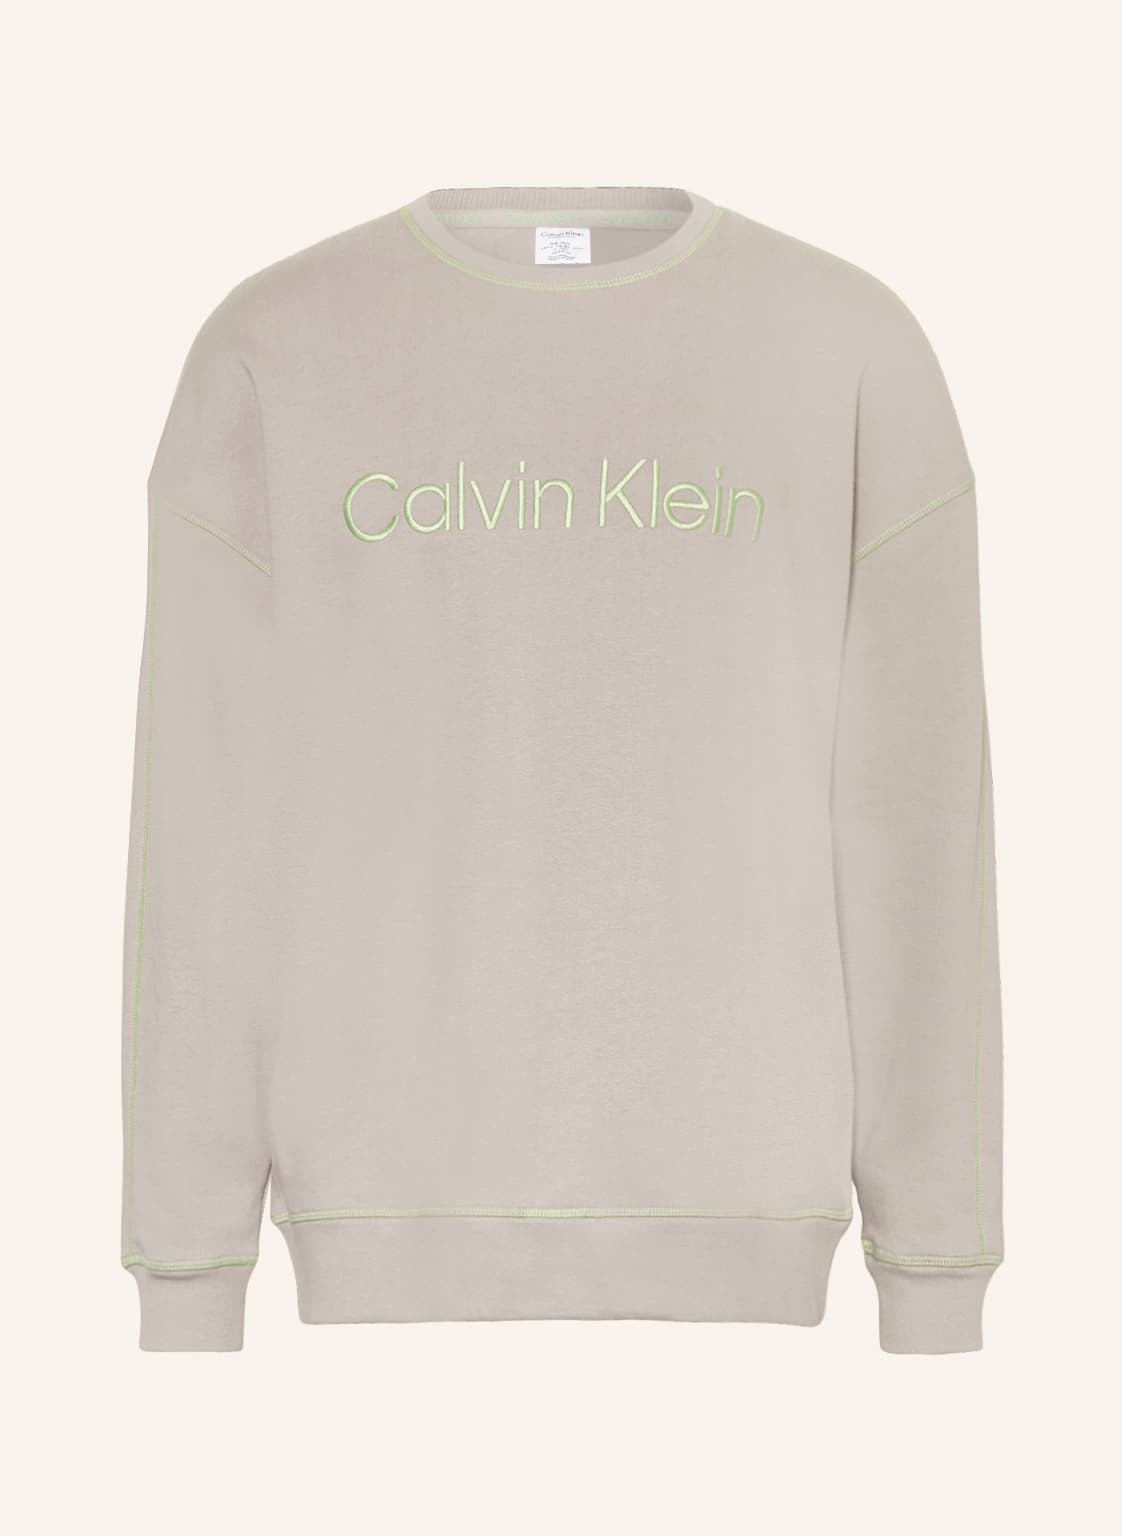 Calvin Klein Lounge-Shirt Future Shift grau von Calvin Klein